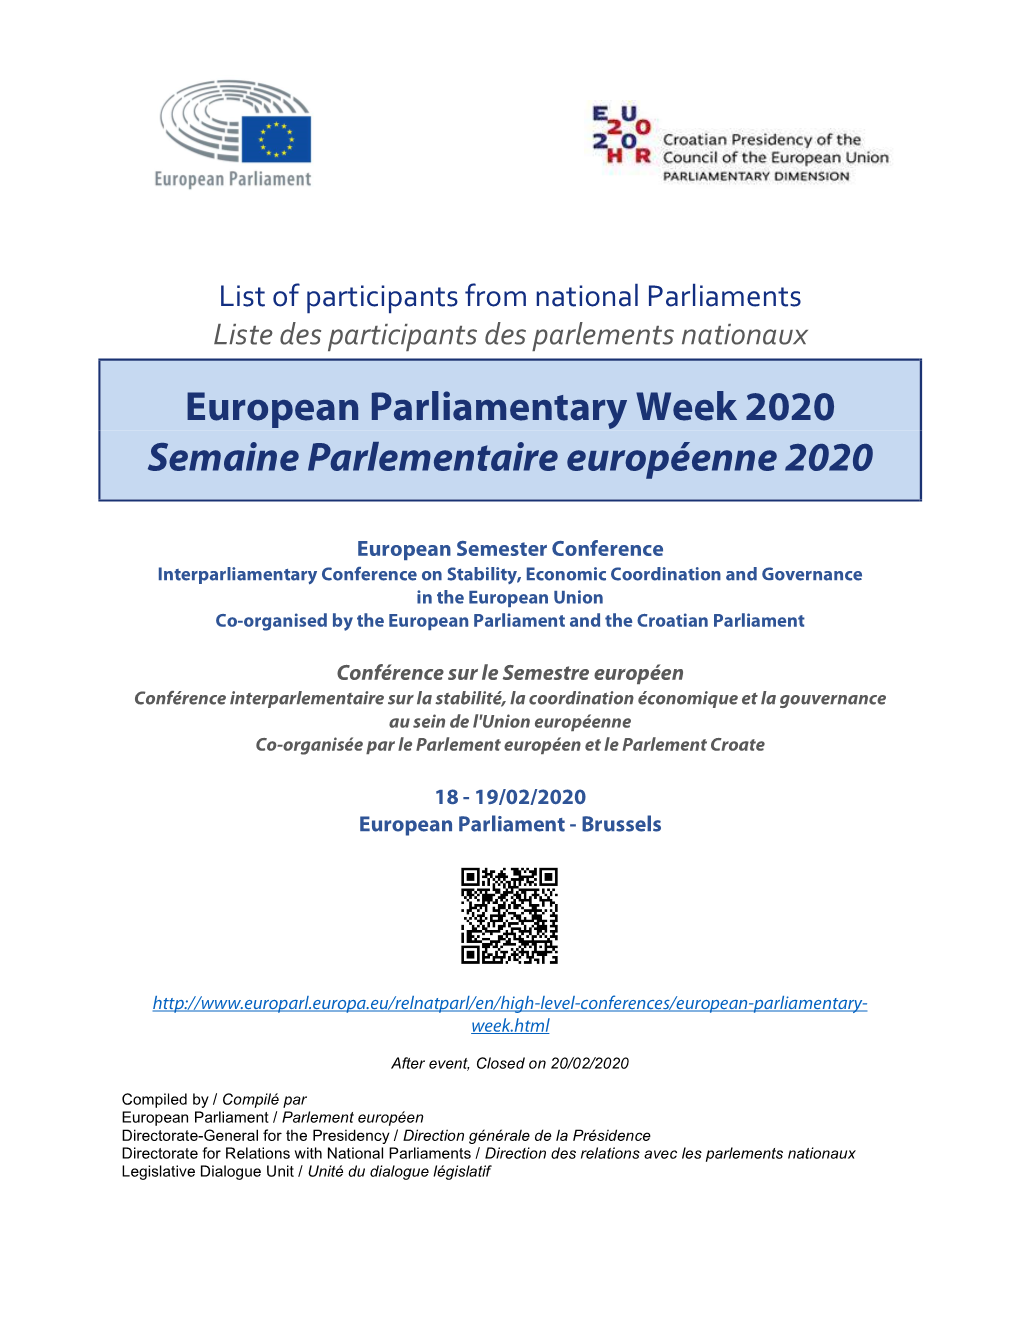 European Parliamentary Week 2020 Semaine Parlementaire Européenne 2020